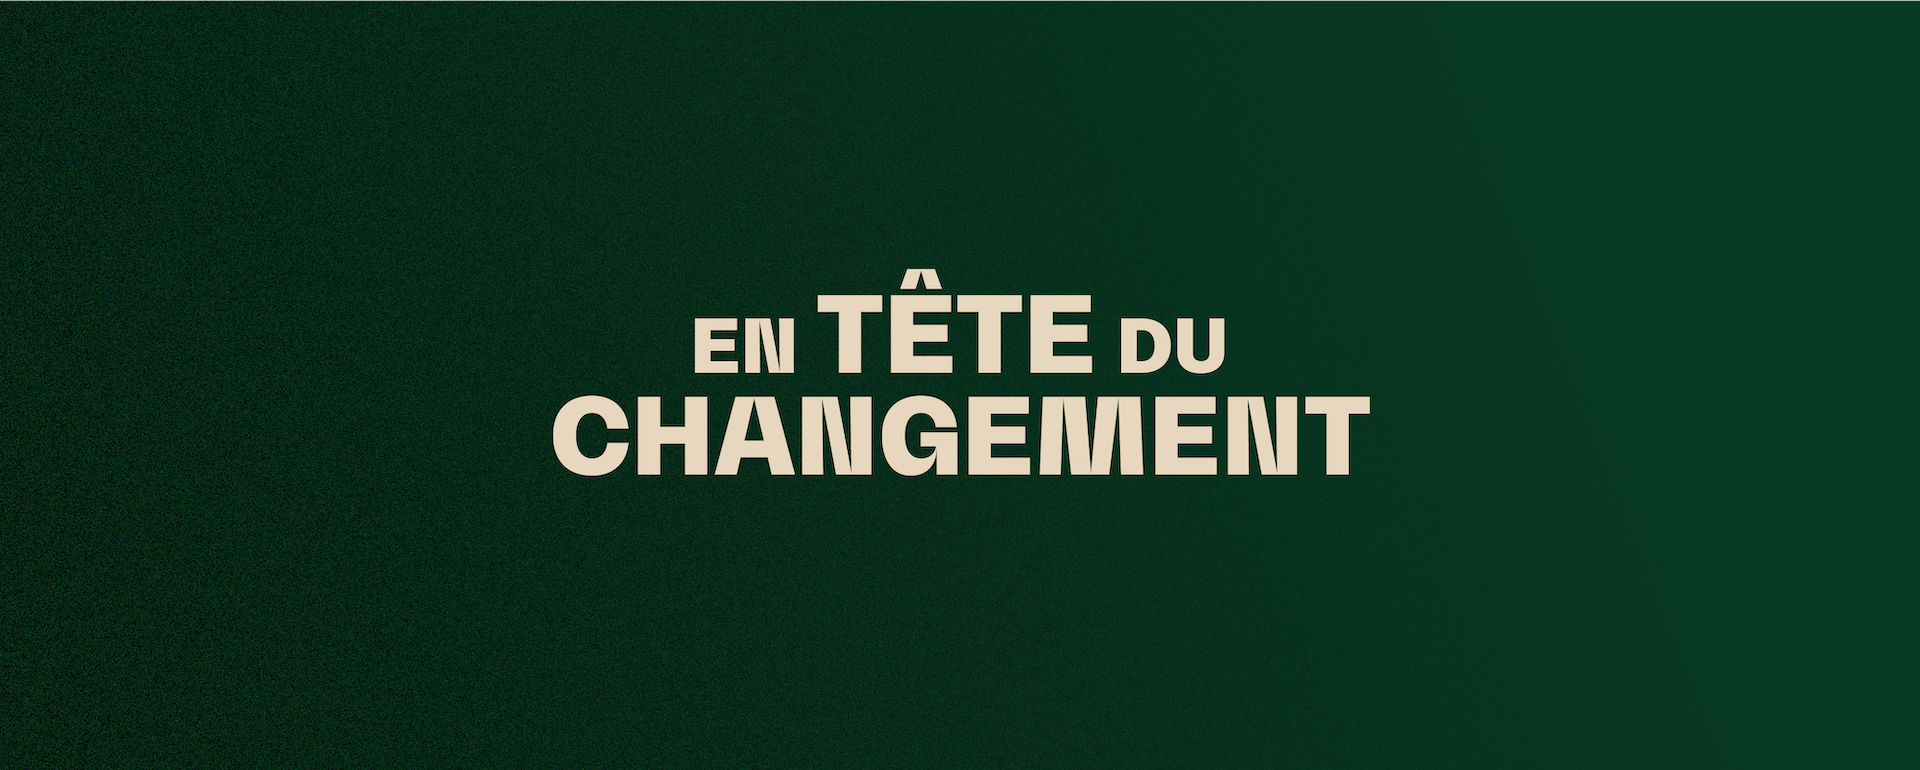 "En tête du changement", the campaign slogan, on a green background